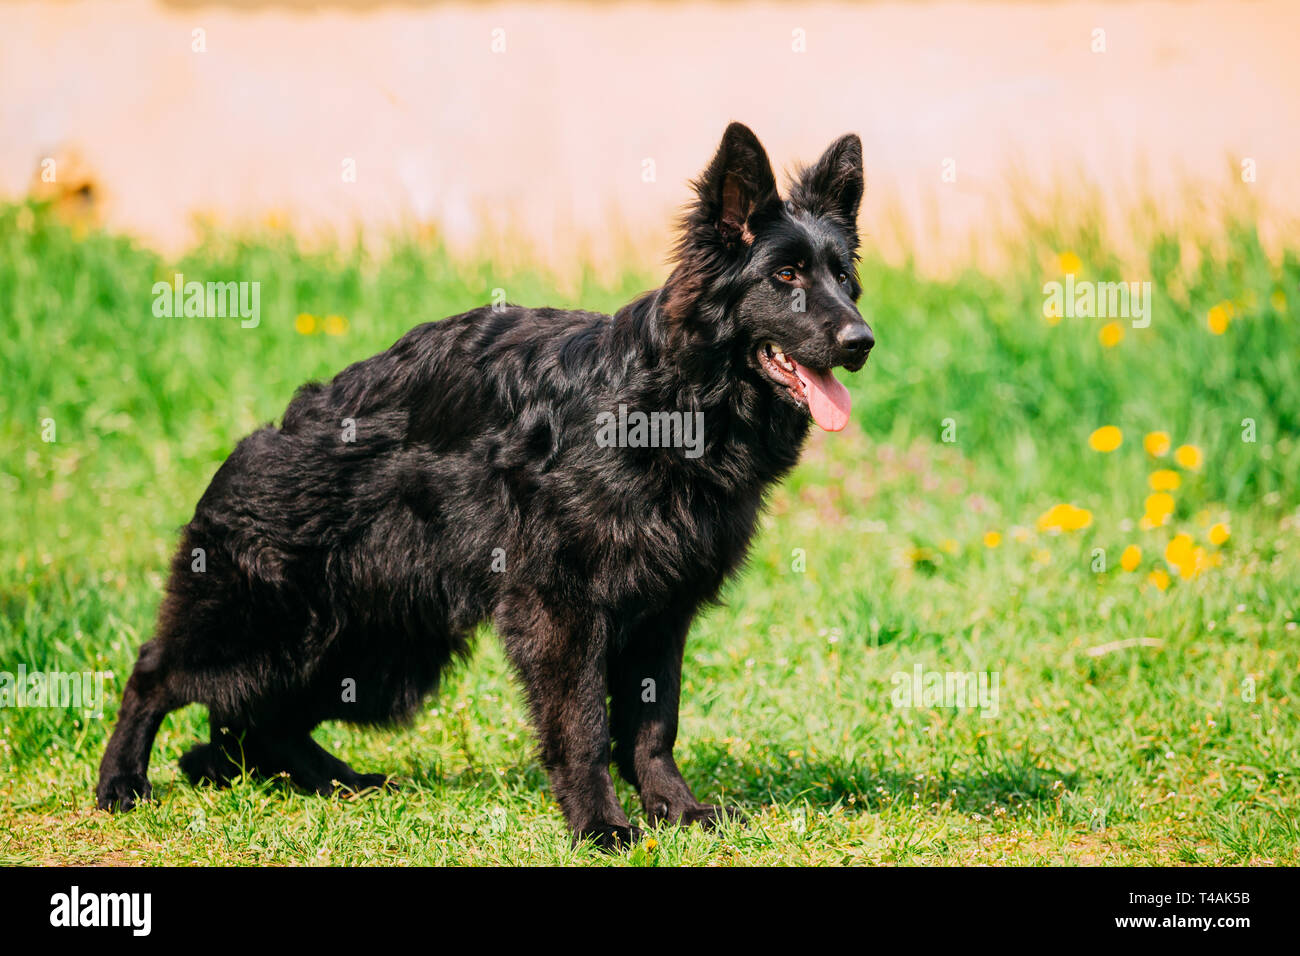 Beautiful Young Black German Shepherd Dog Standing In Green Grass Alsatian Wolf Dog Or German Shepherd Dog Deutscher Dog Stock Photo Alamy